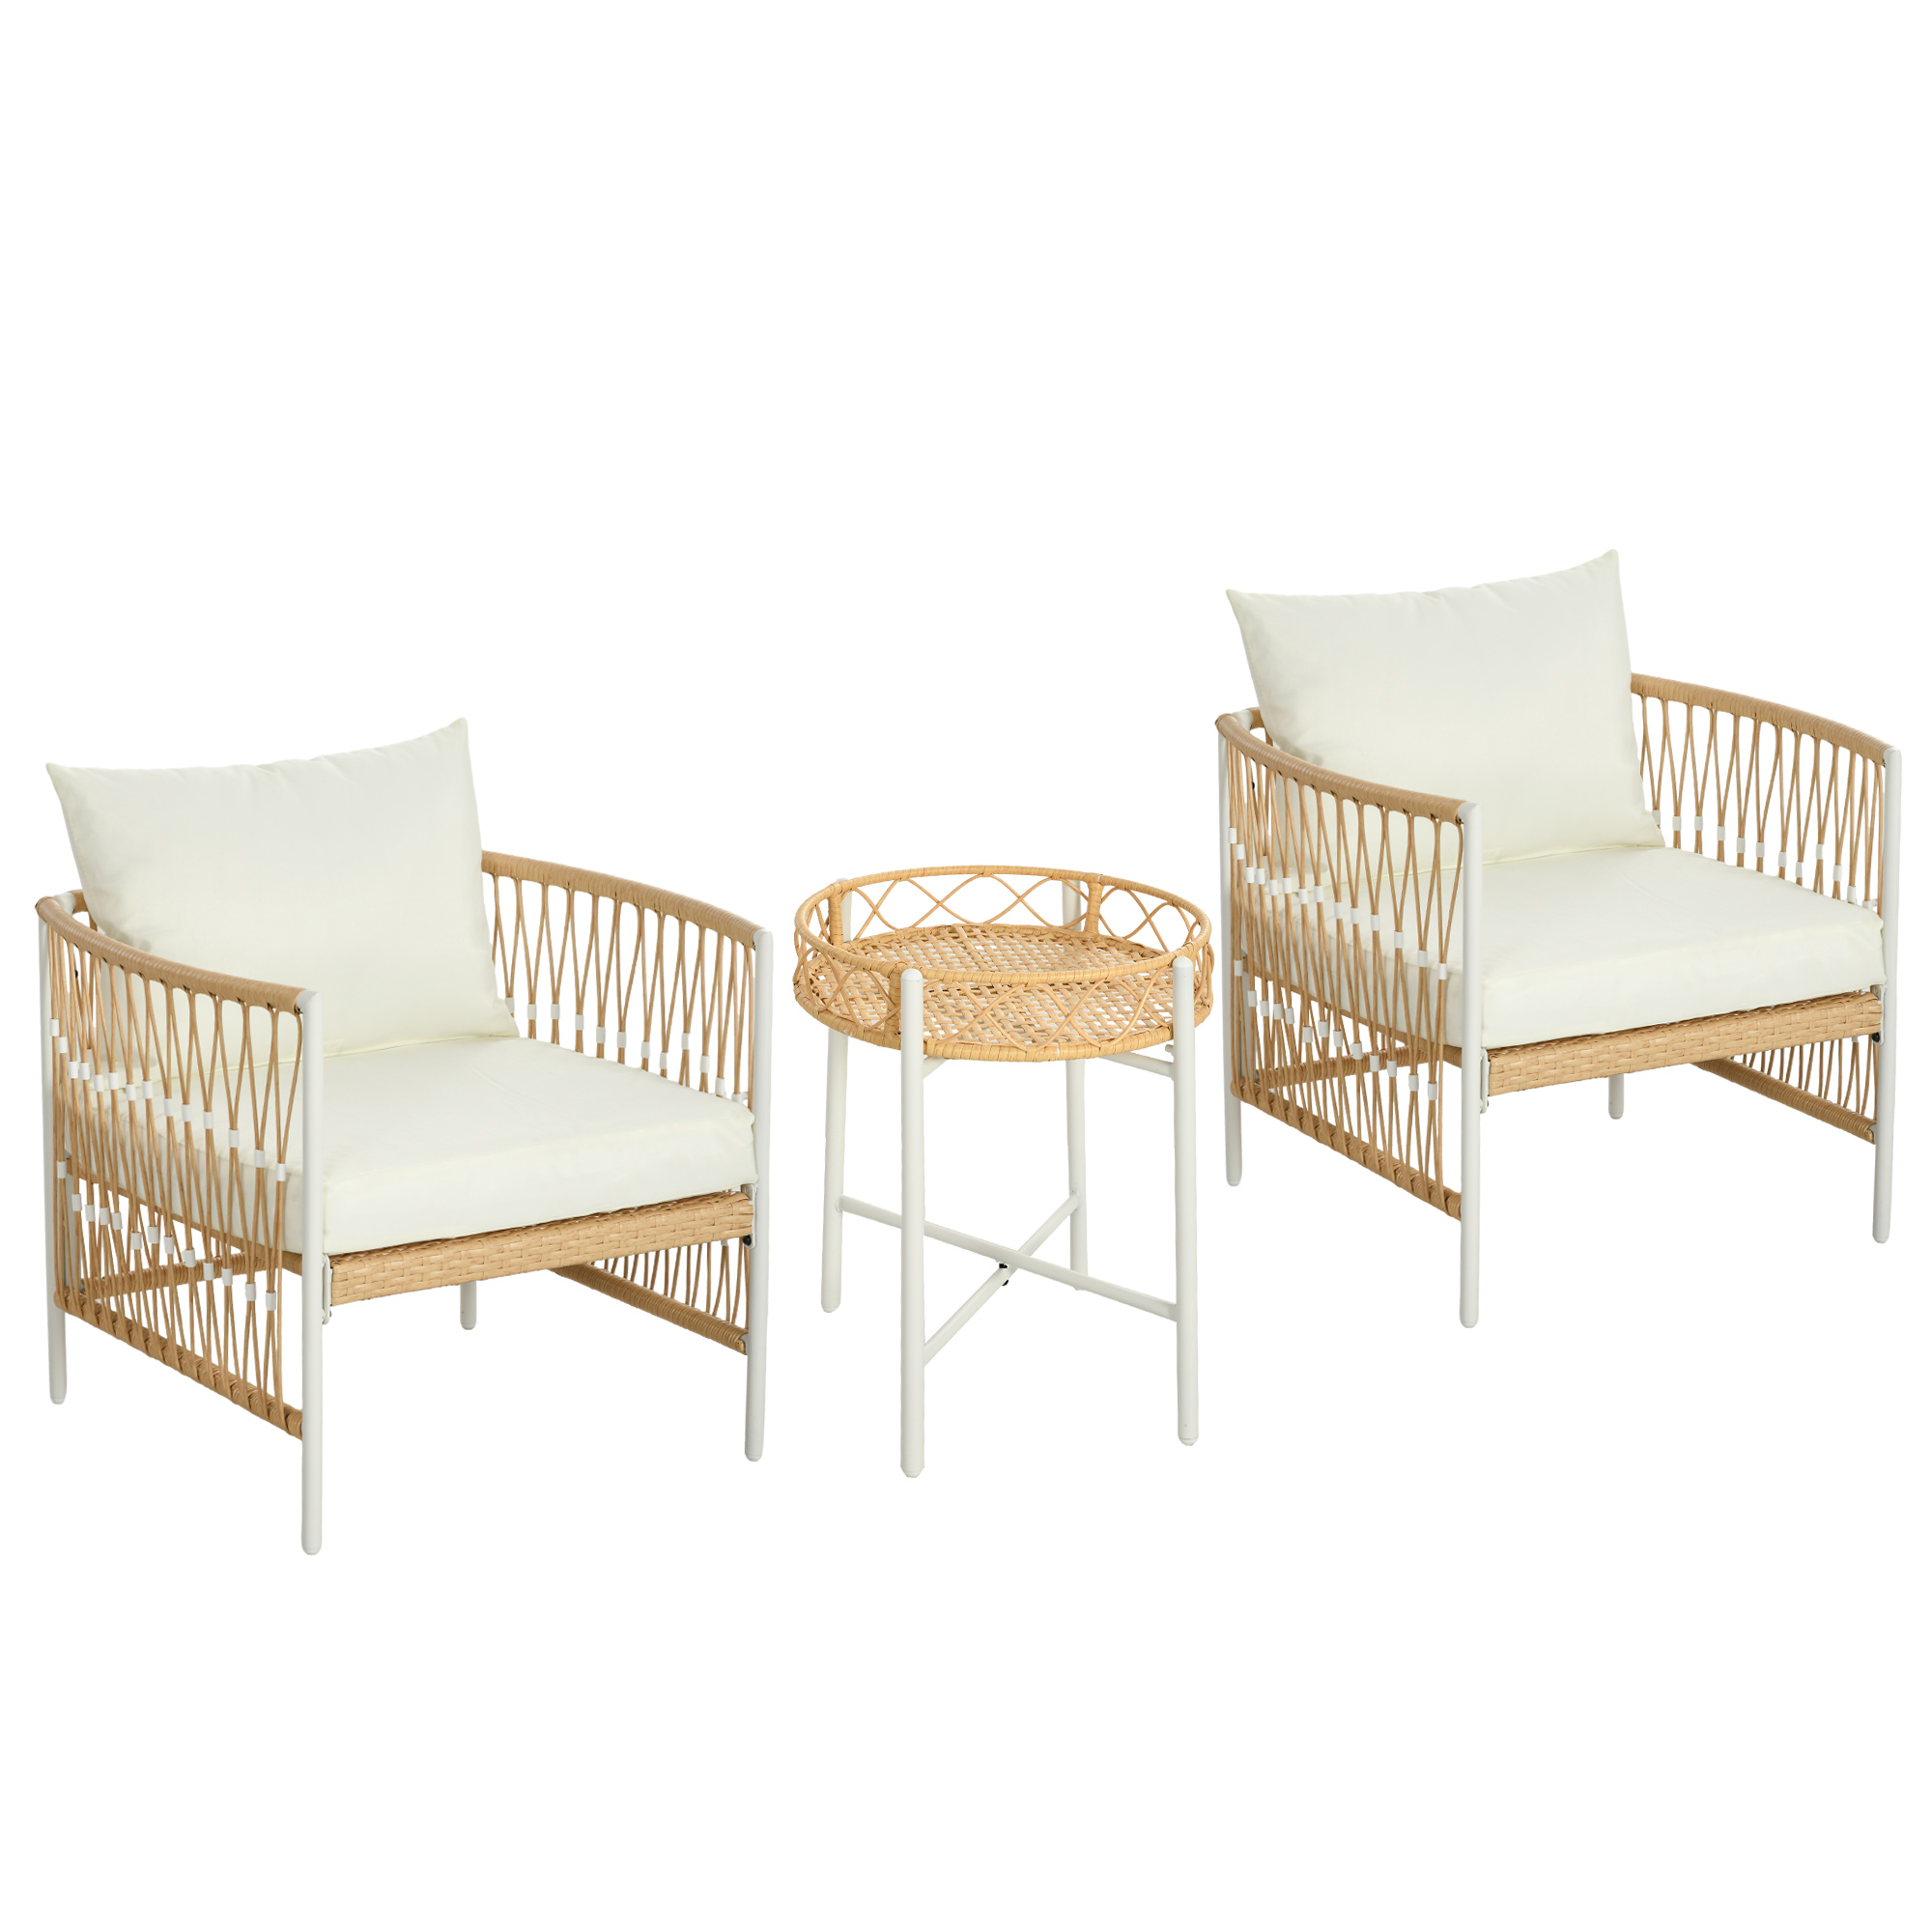 Boho Style Rattan Garden σετ με 2 καρέκλες με μαξιλάρια και στρογγυλό τραπέζι